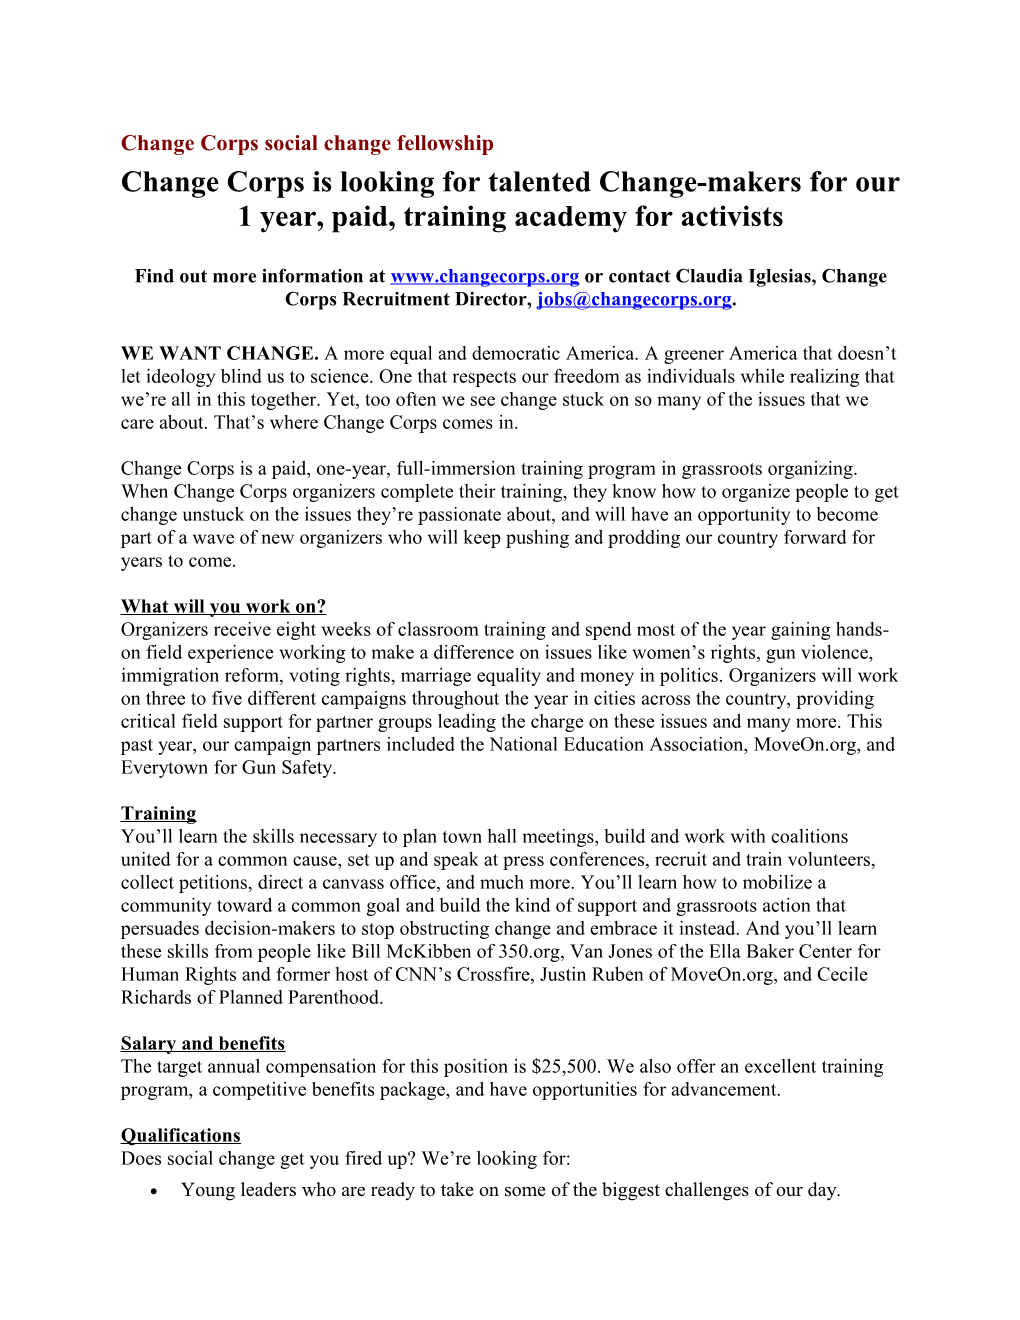 Change Corps Social Change Fellowship